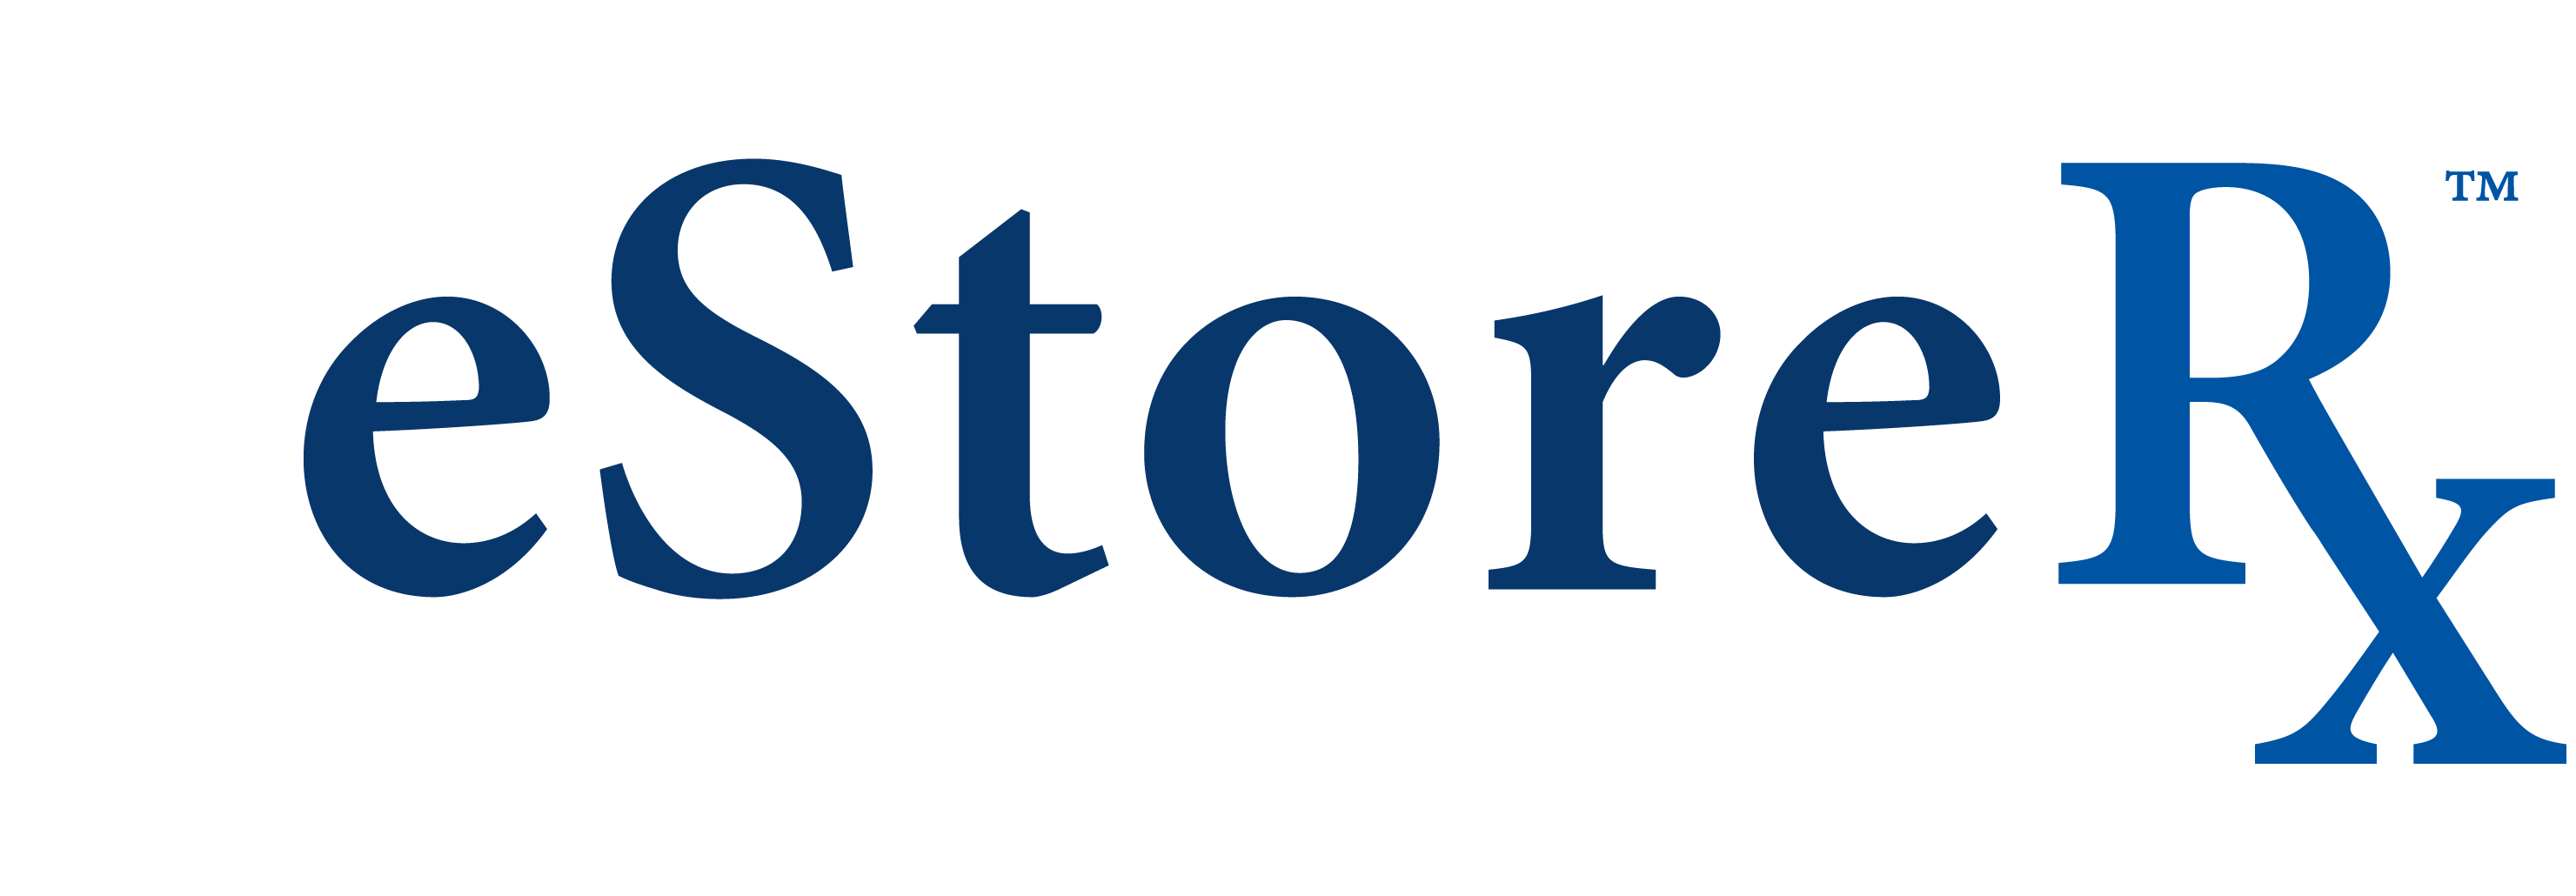 eStoreRx_Logo